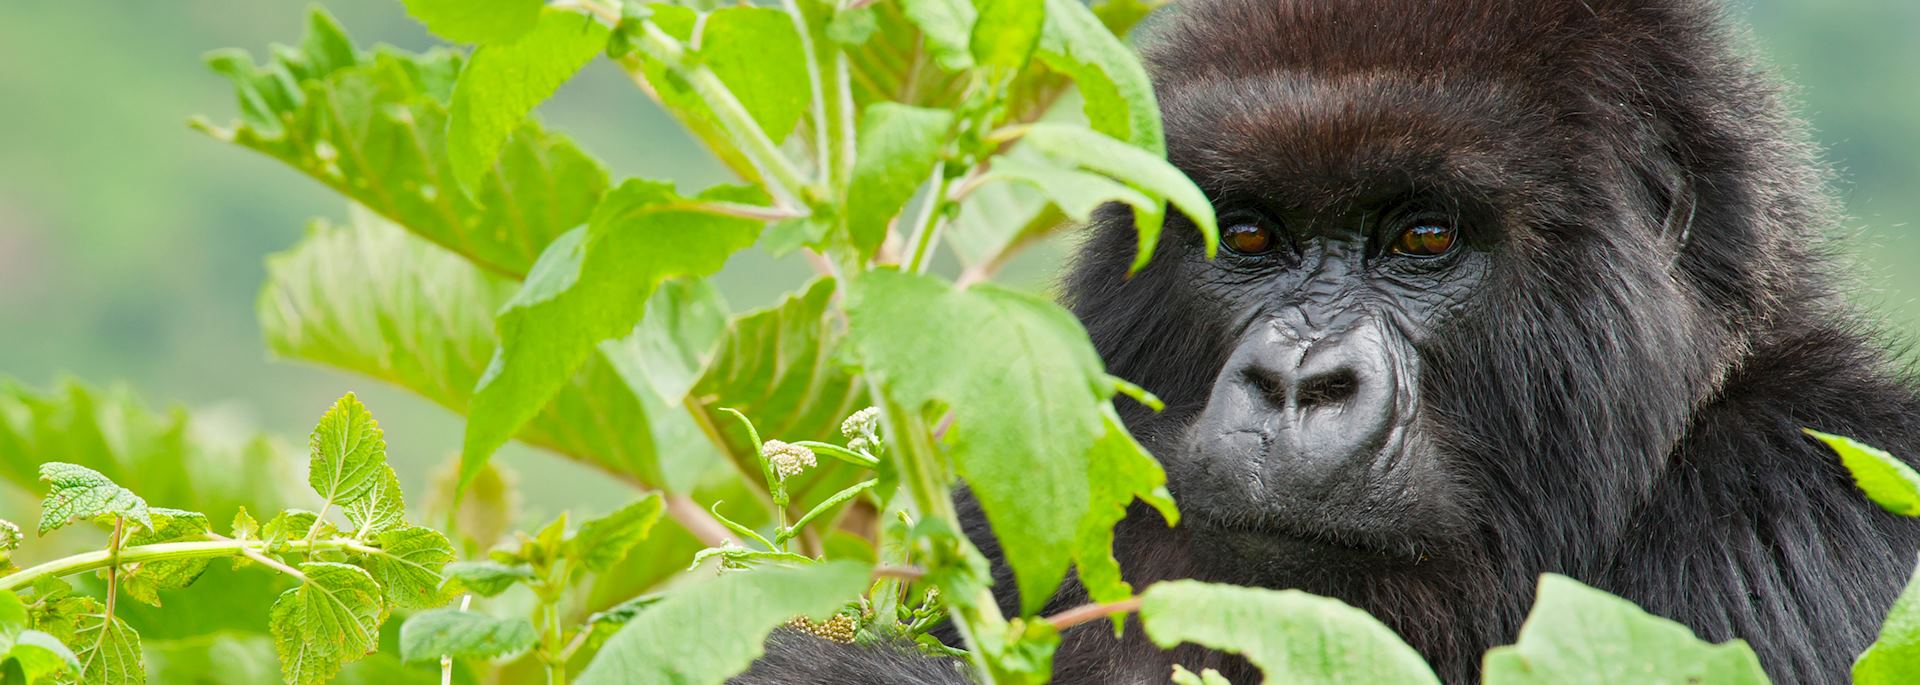 Mountain gorilla in Rwanda